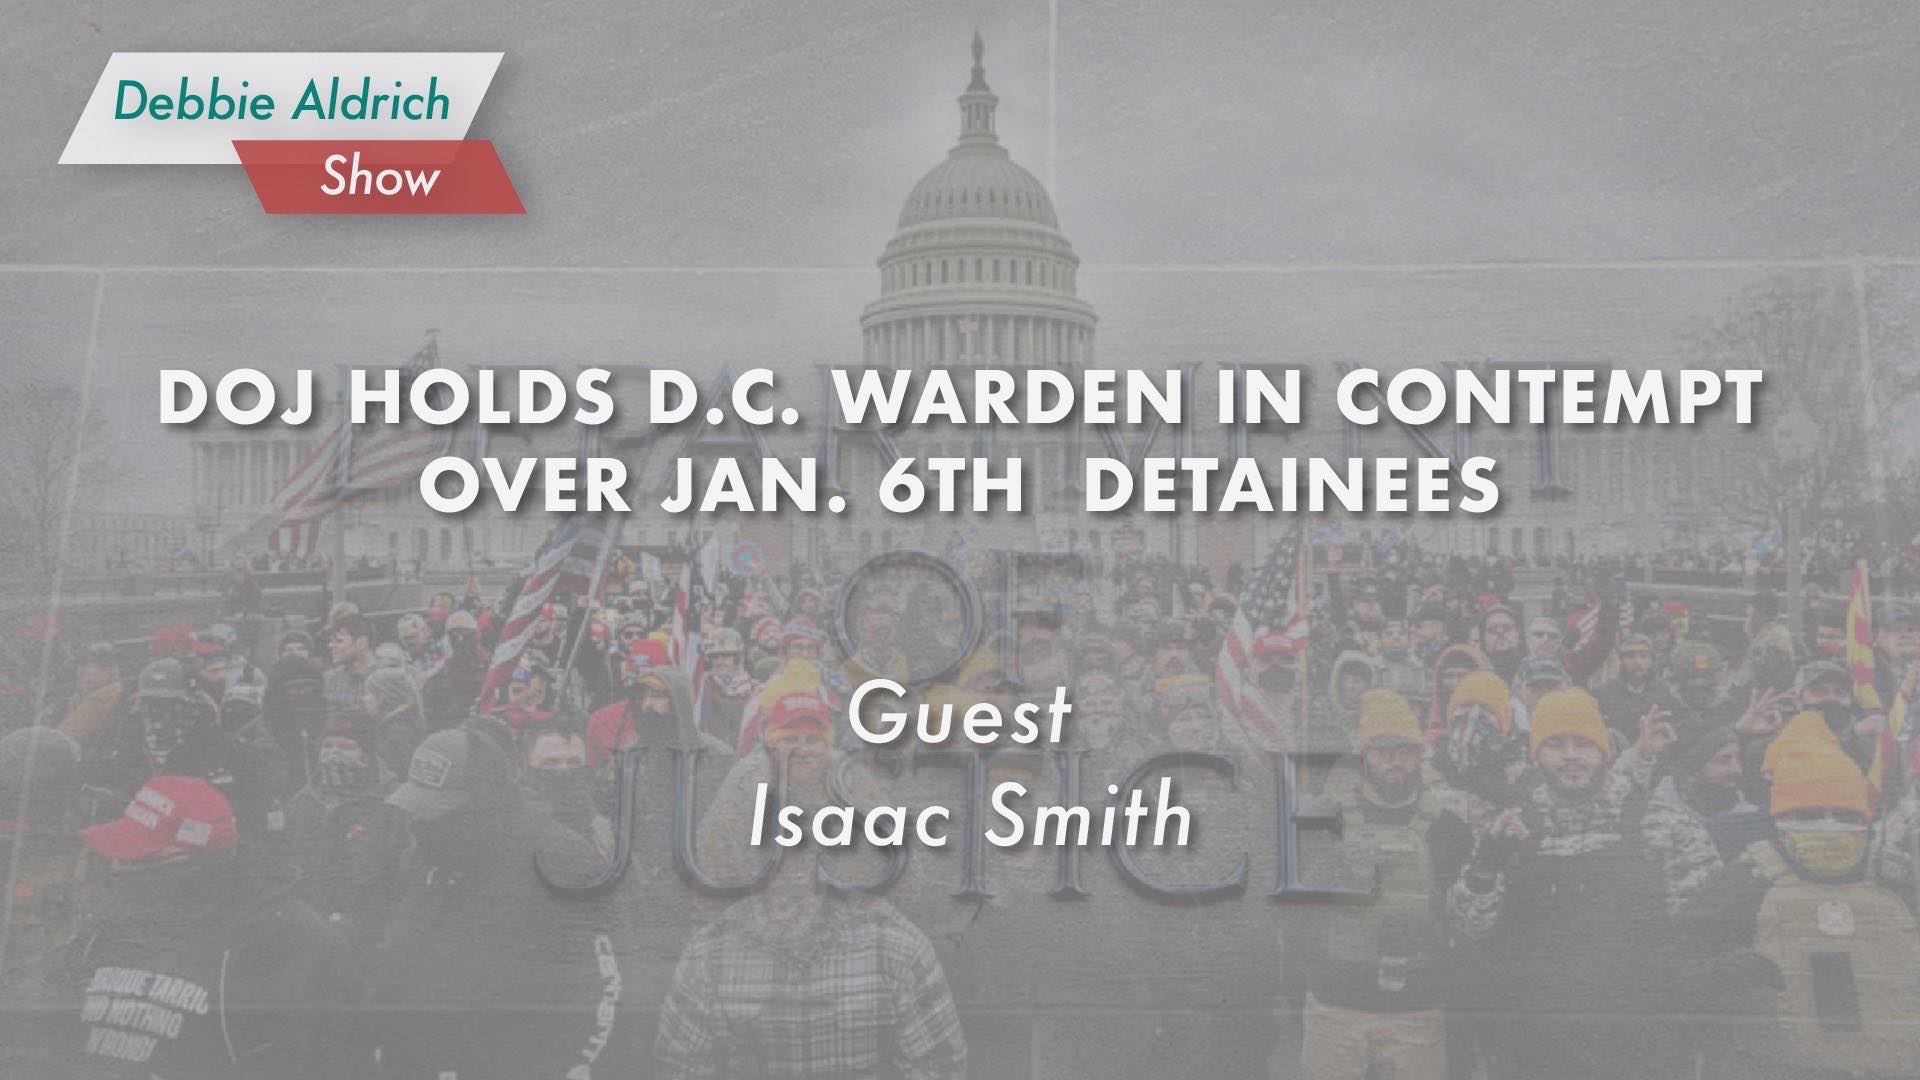 Debbie Aldrich: Isaac Smith - DOJ Holds D.C, Warden In Contempt Over Jan. 6Th Detainees